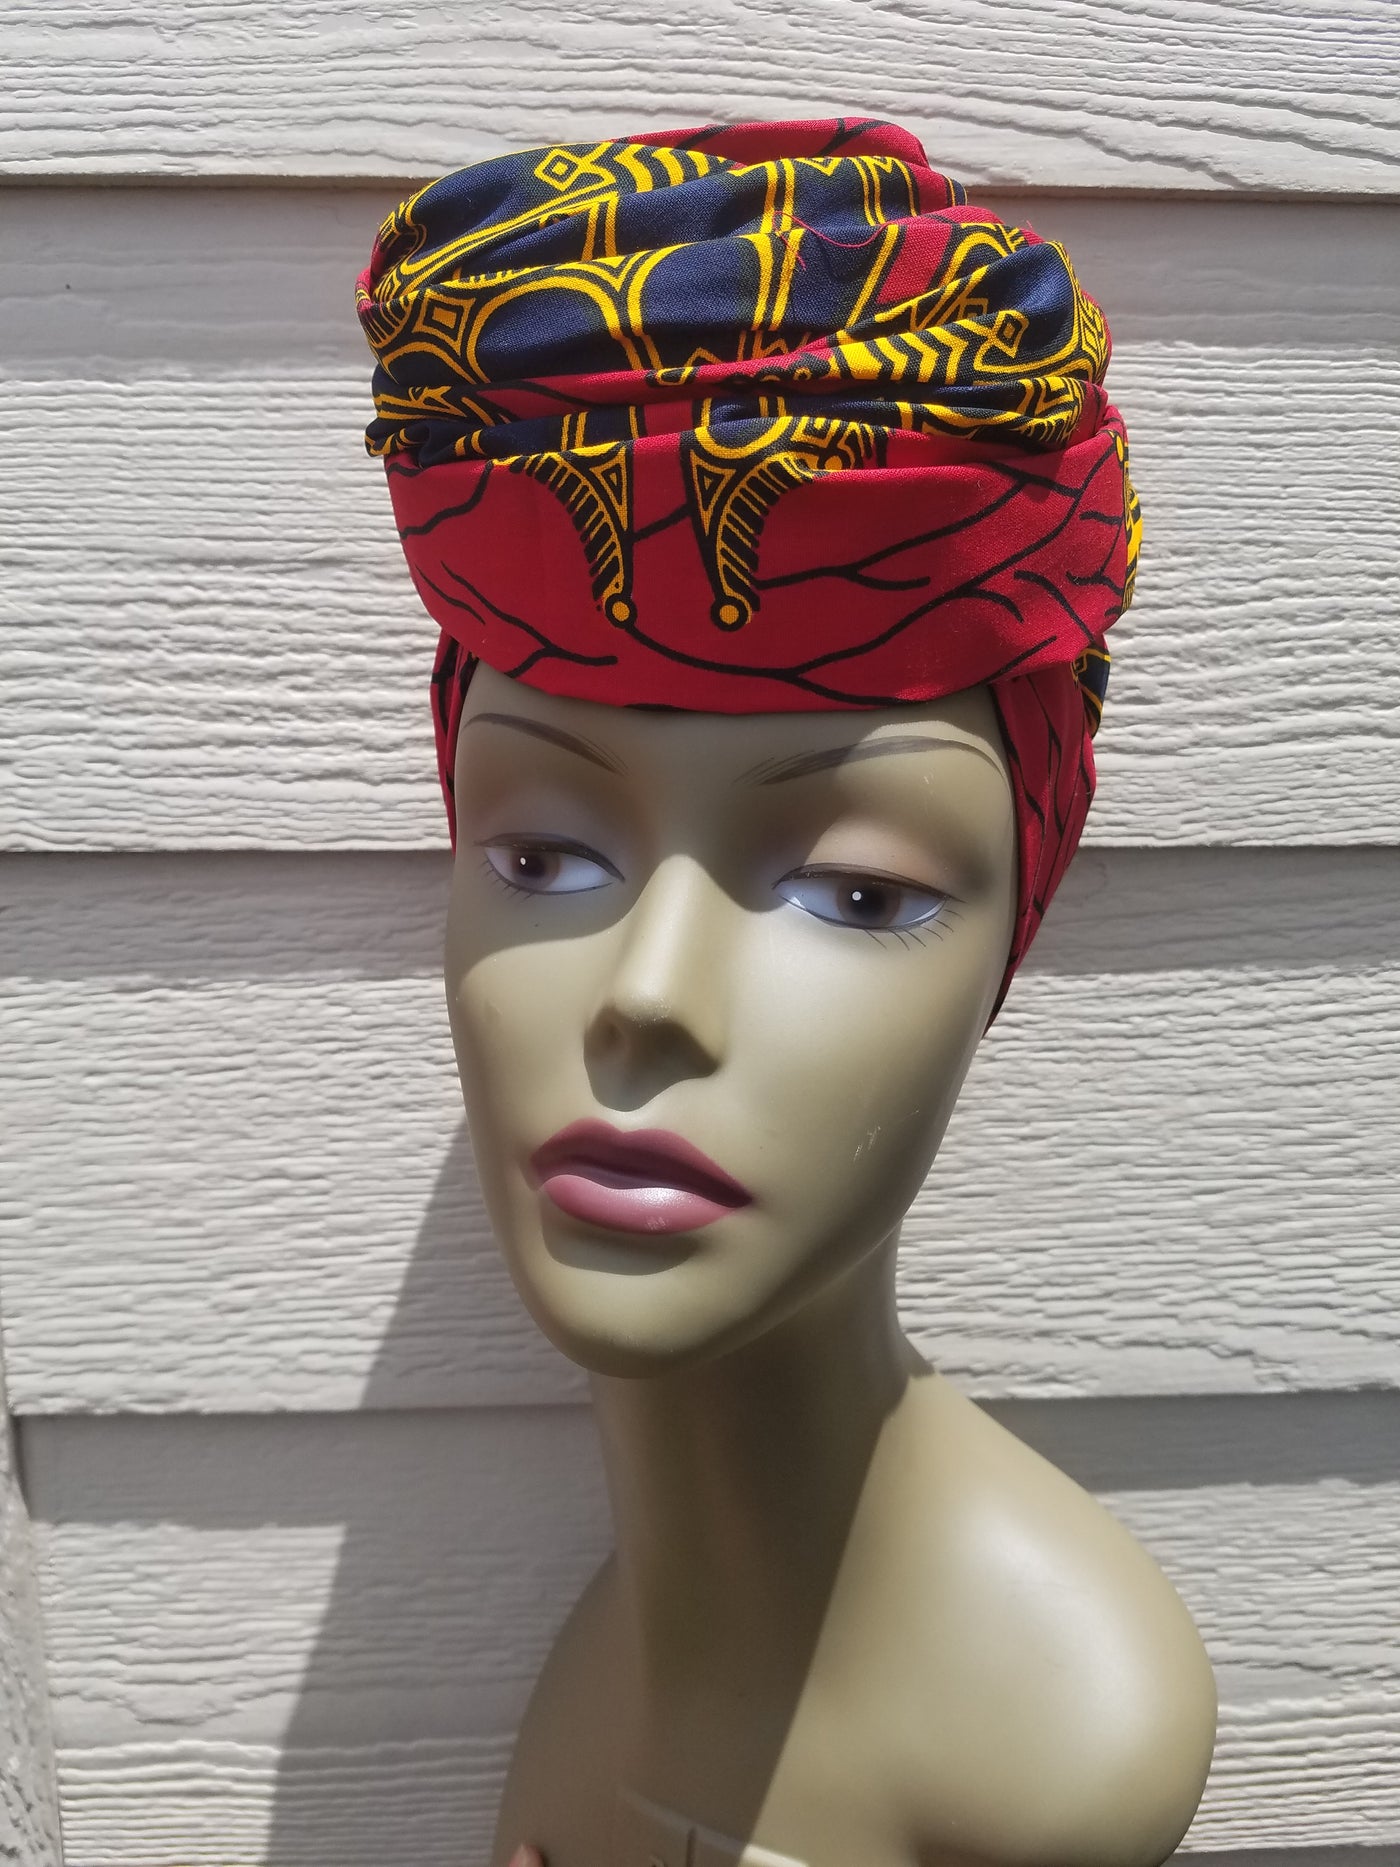 Red and Black African Fabric Headwrap. Ankara Headwrap